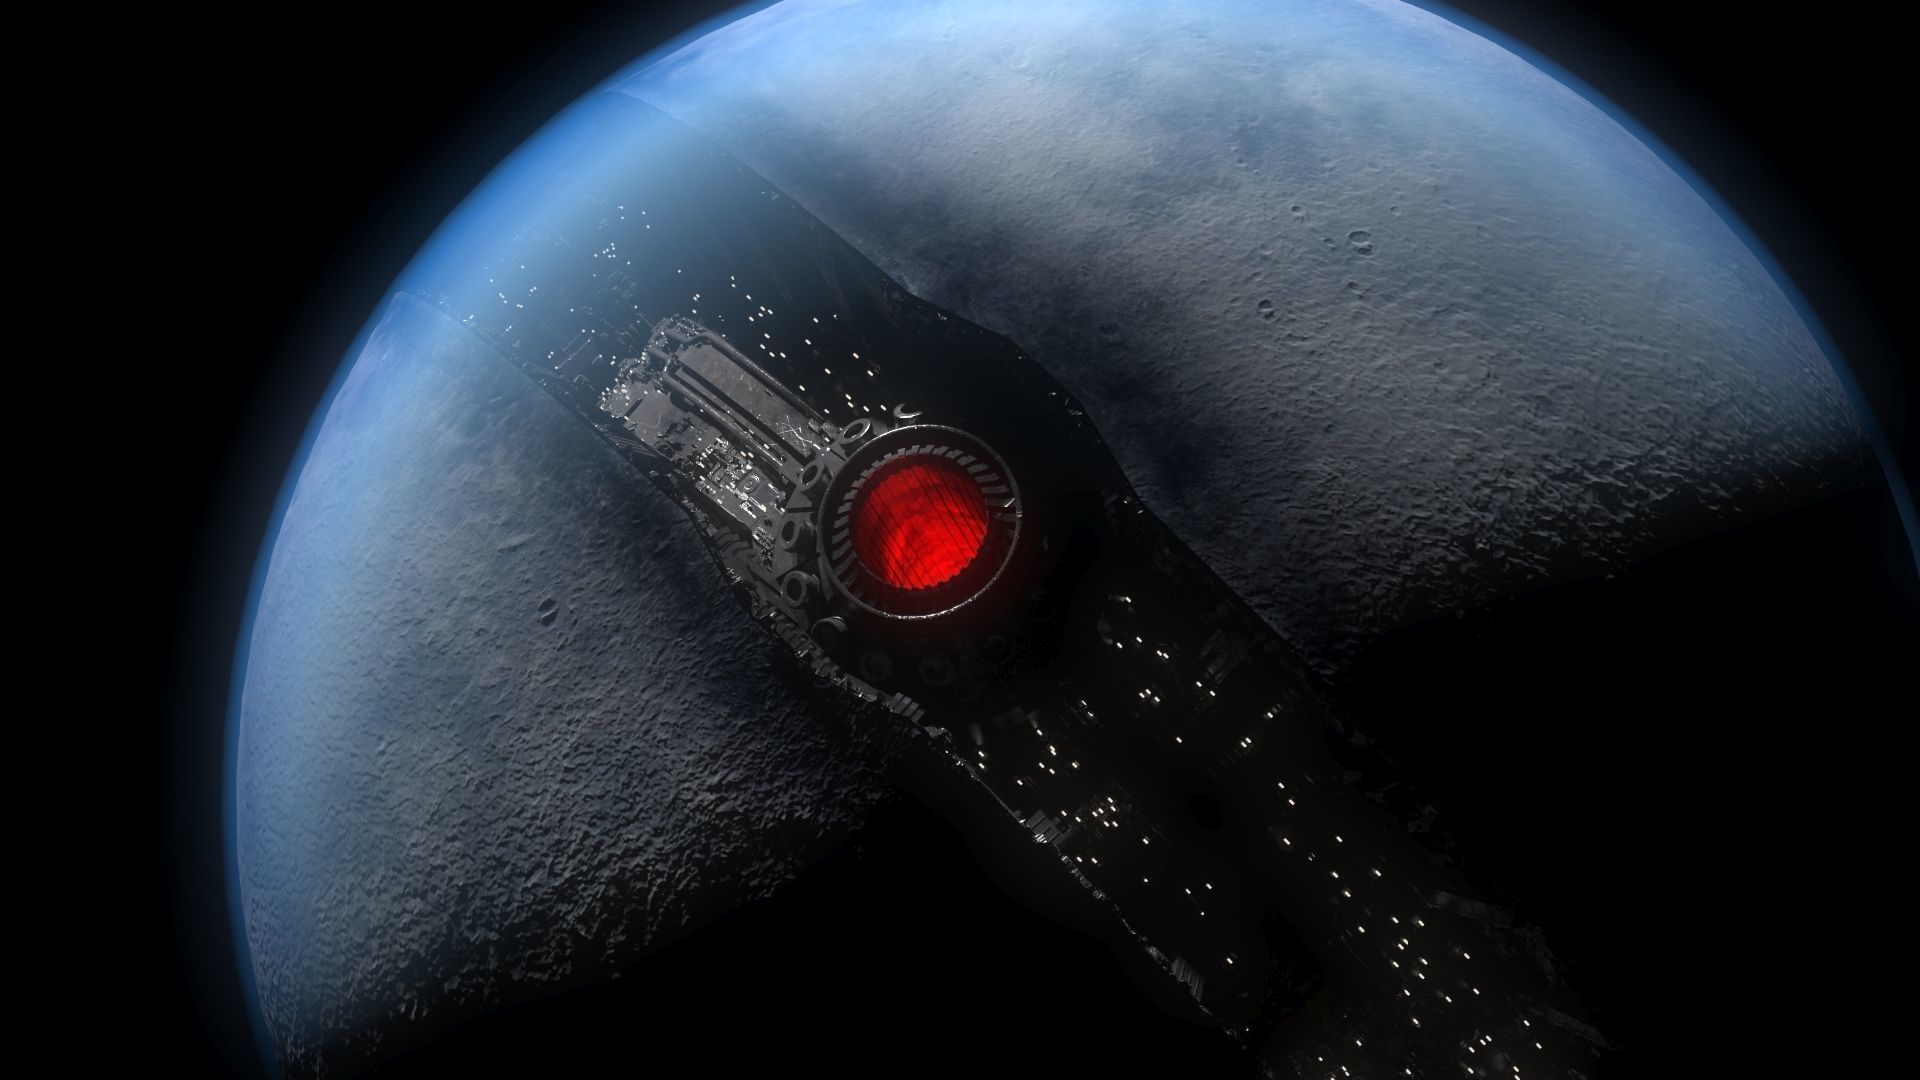 Which star system does Starkiller base destroy?